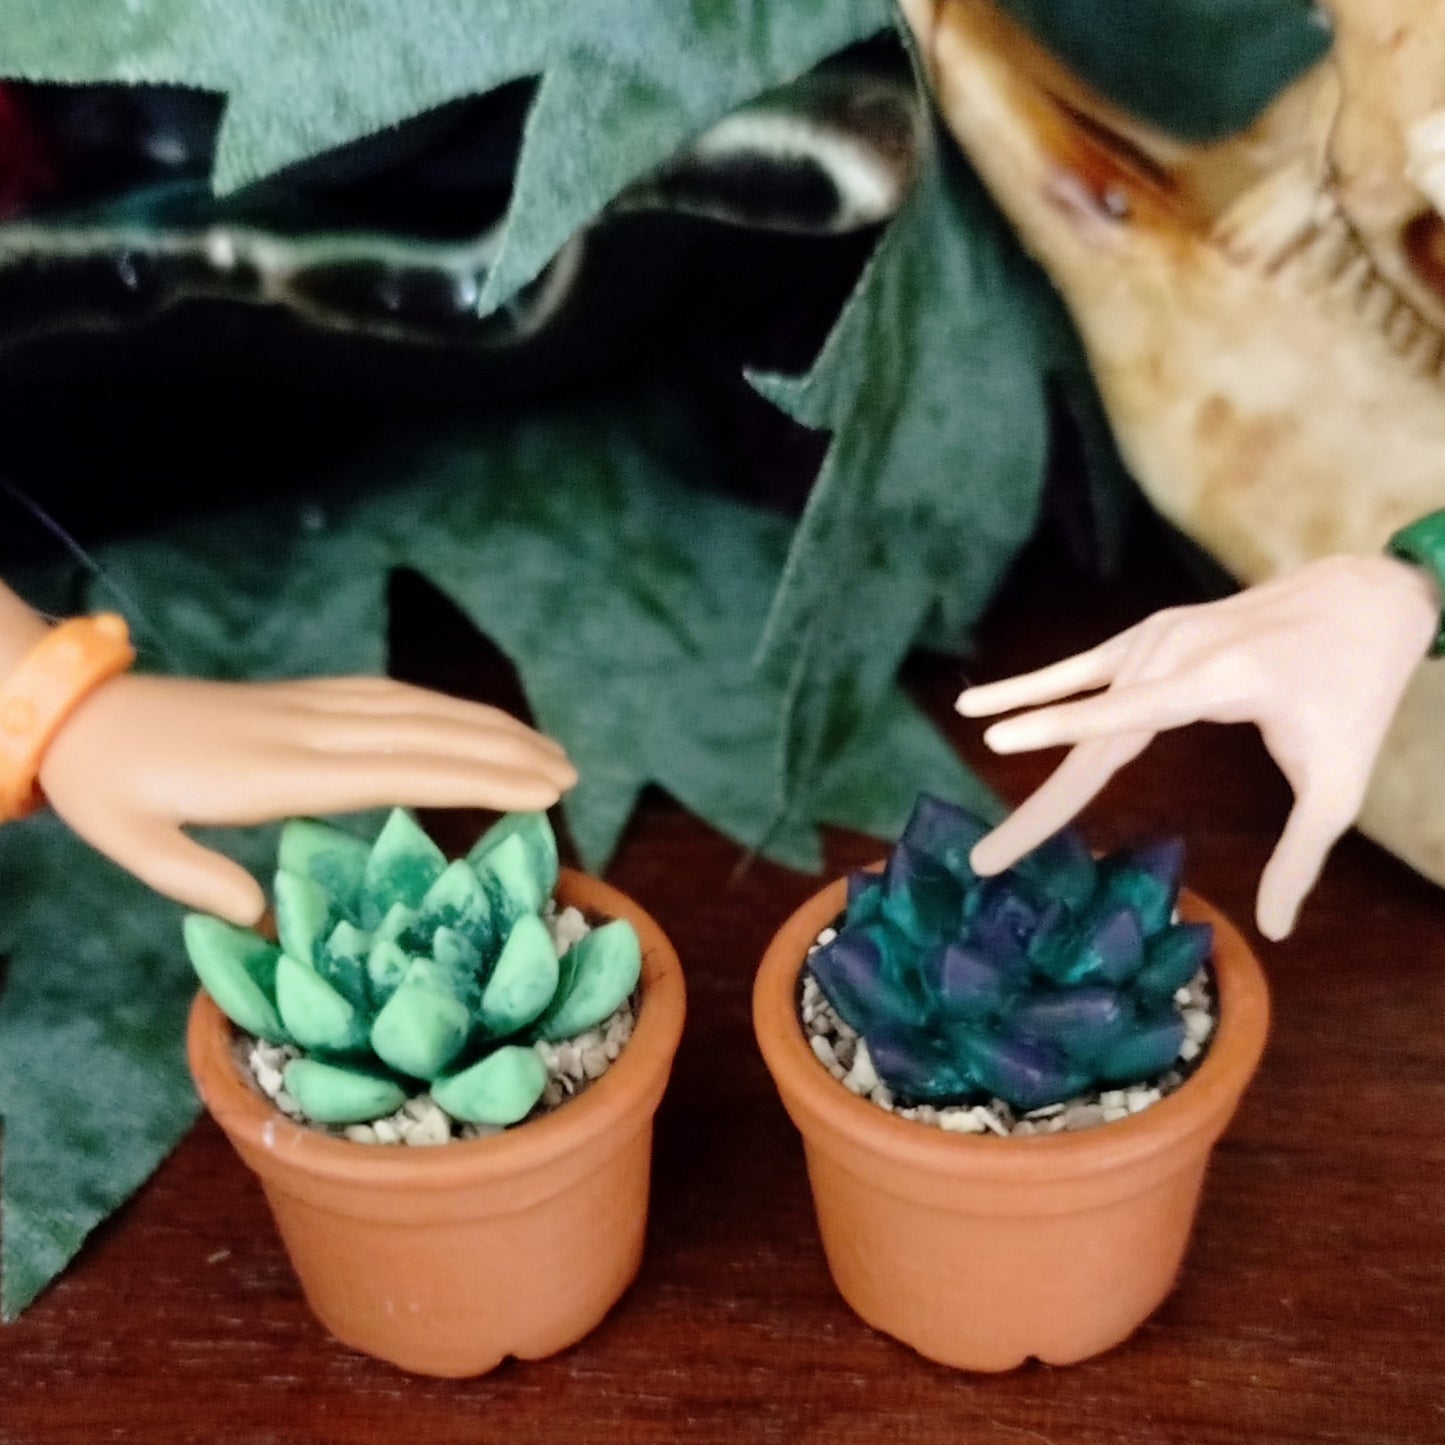 Succulents in Terracotta Pot